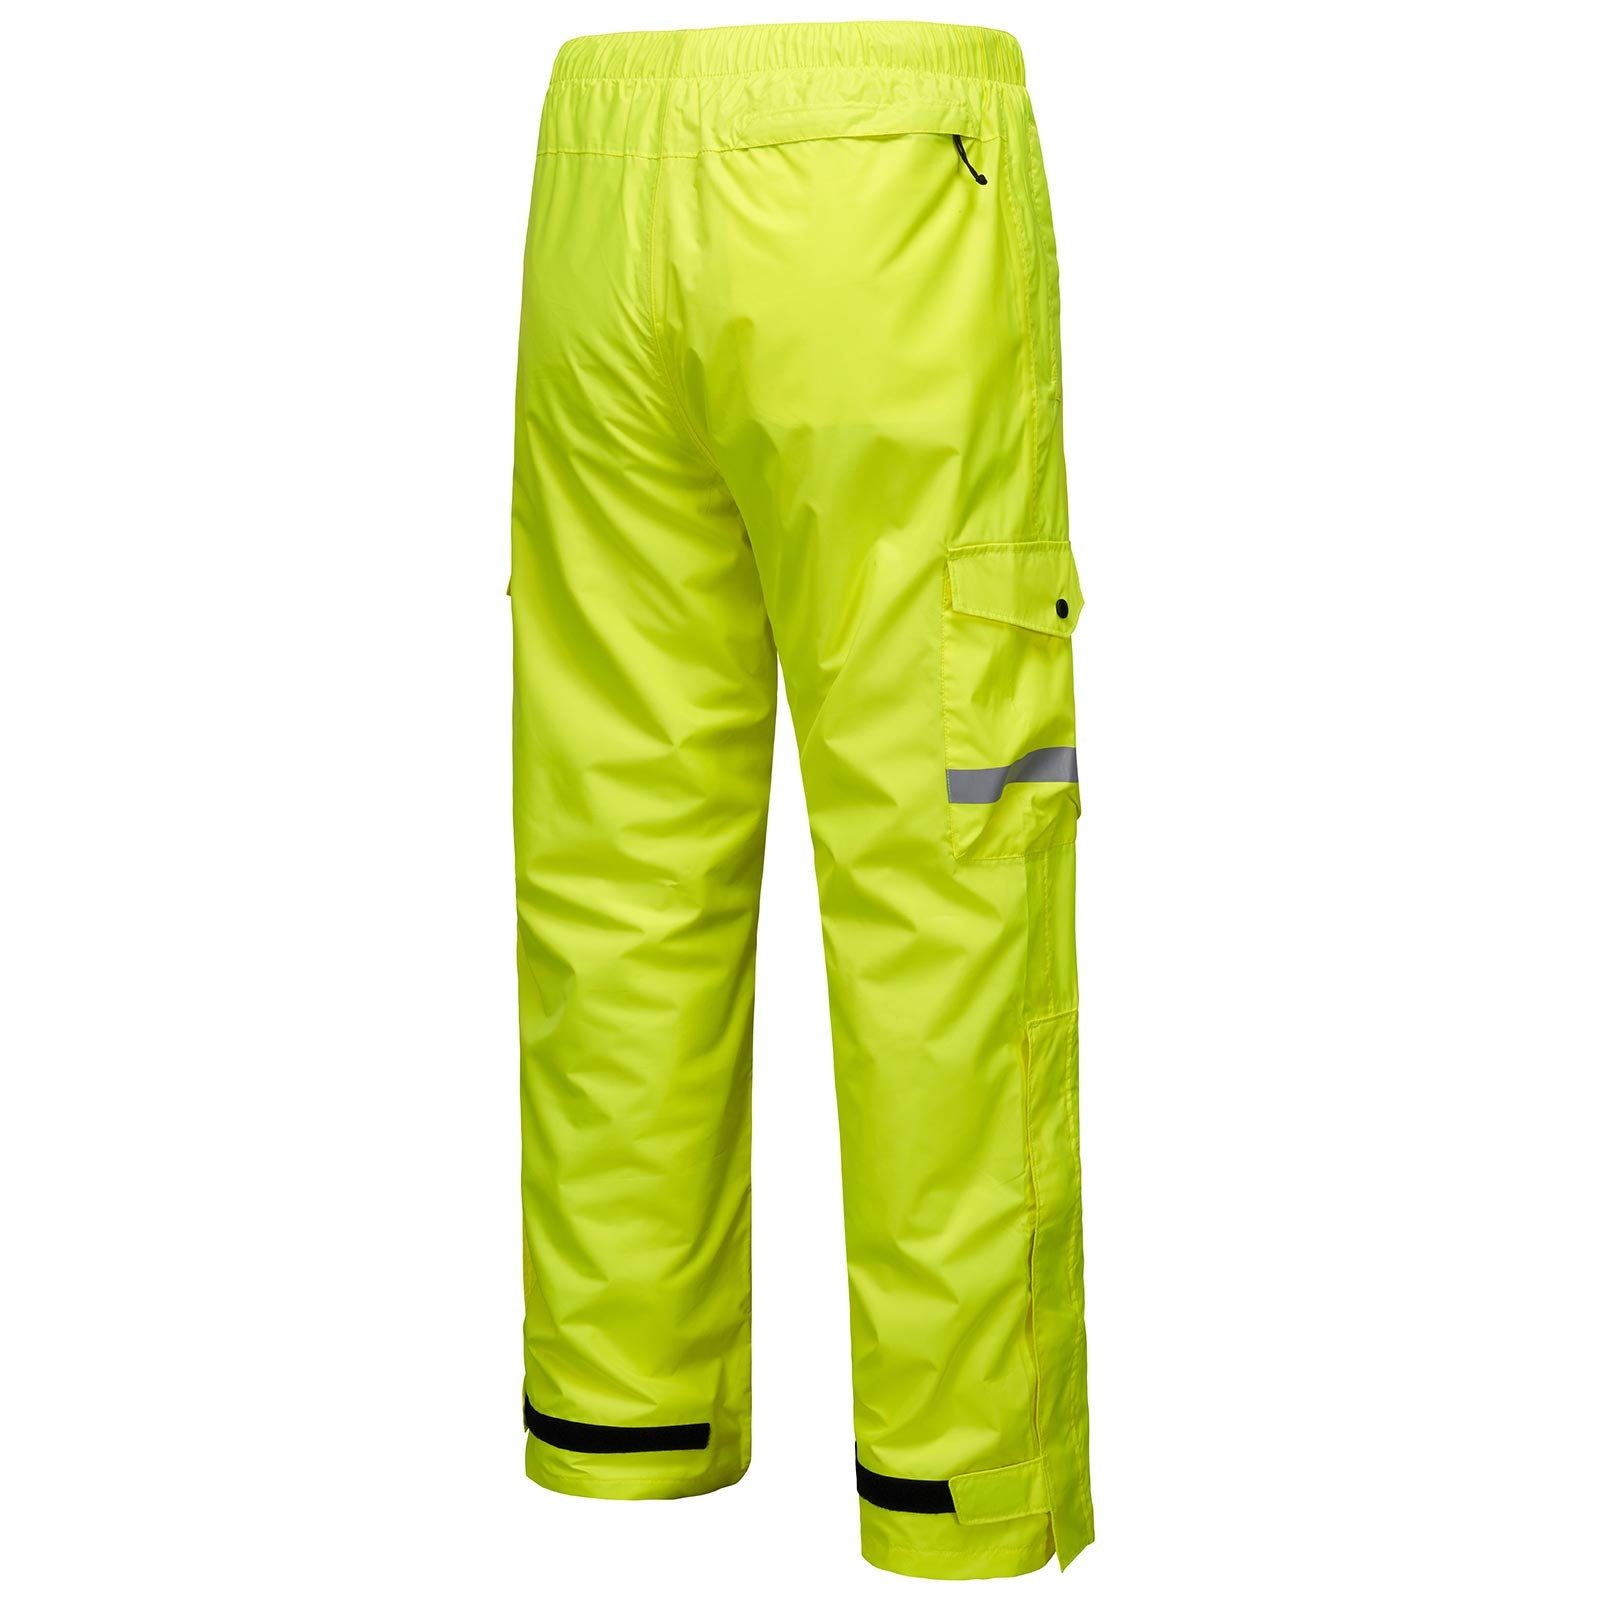 Men’s Complete Breathable Waterproof Rain Pants with 1/2 Zip Legs, Black / 2XL (44-46)W x 34L